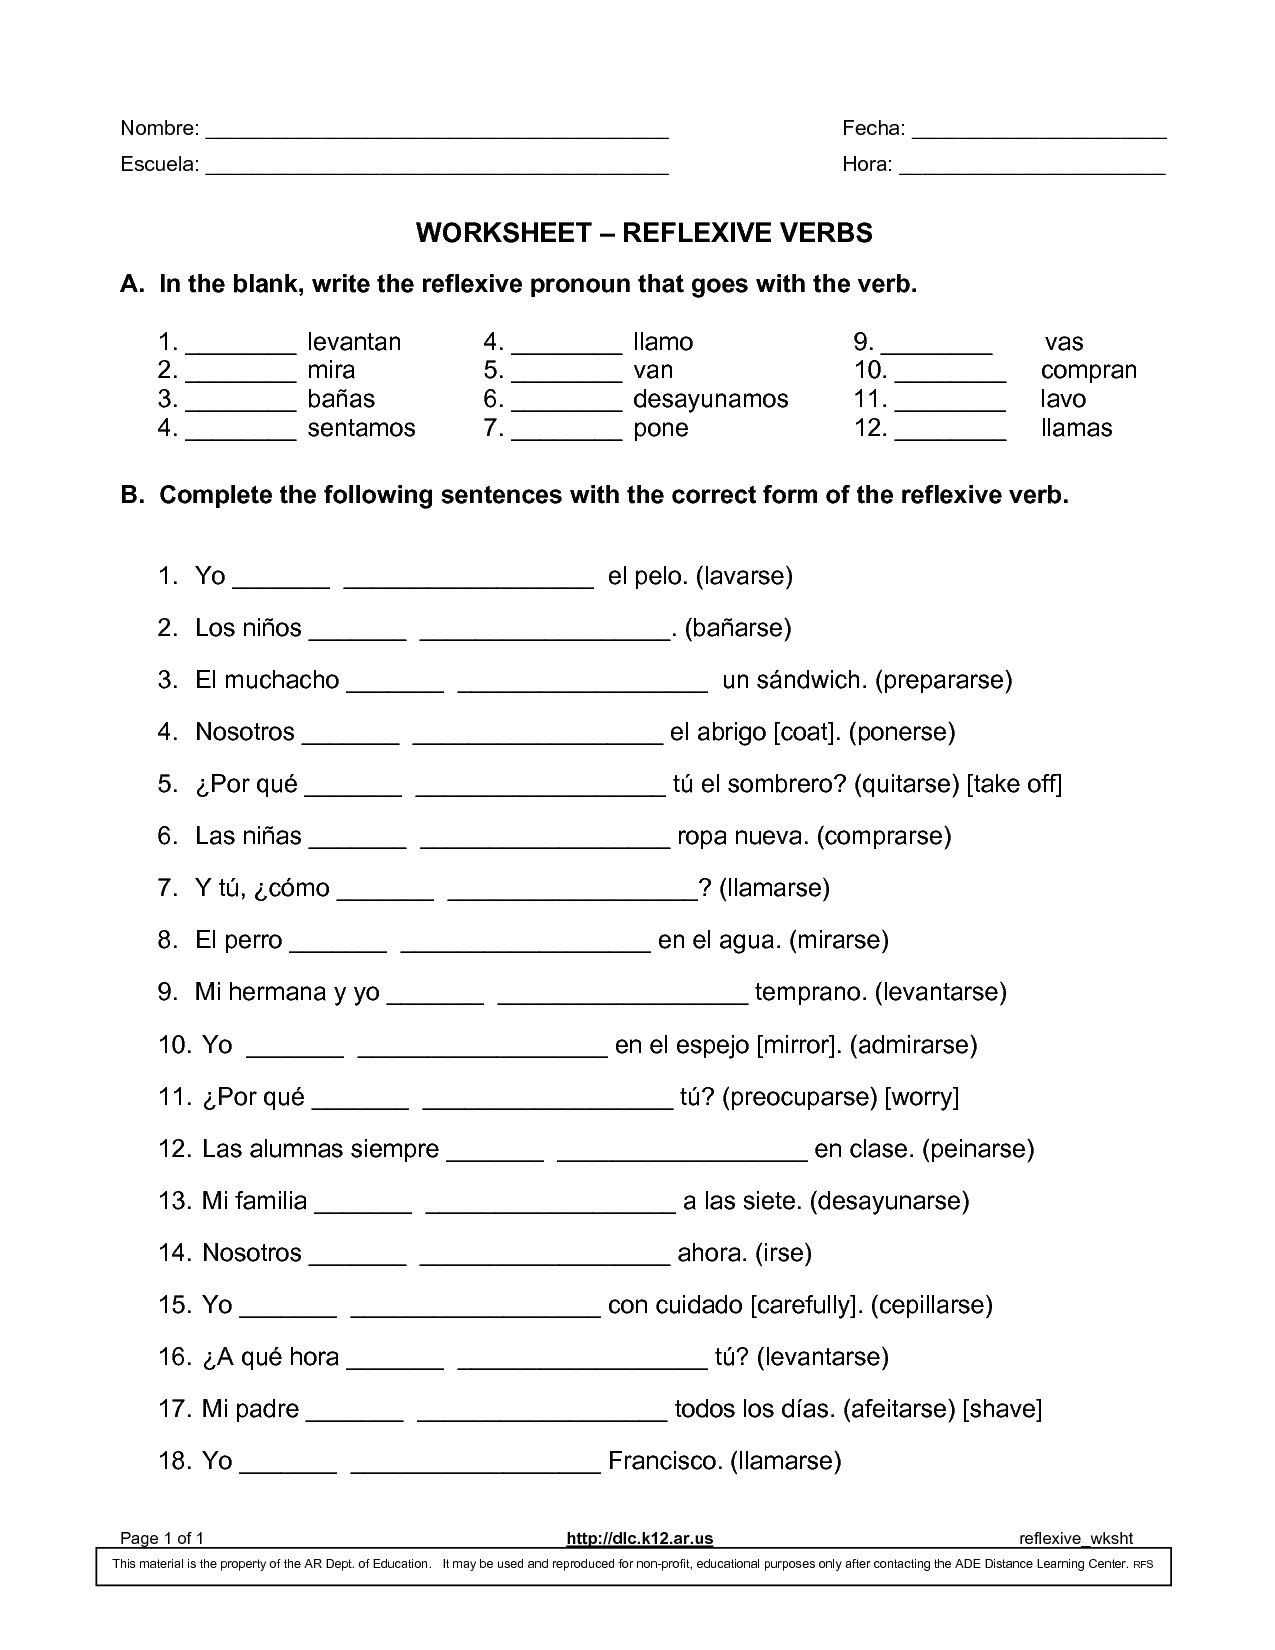 17 Best Images Of French Verb Practice Worksheets Spanish Verb Conjugation Worksheets Blank